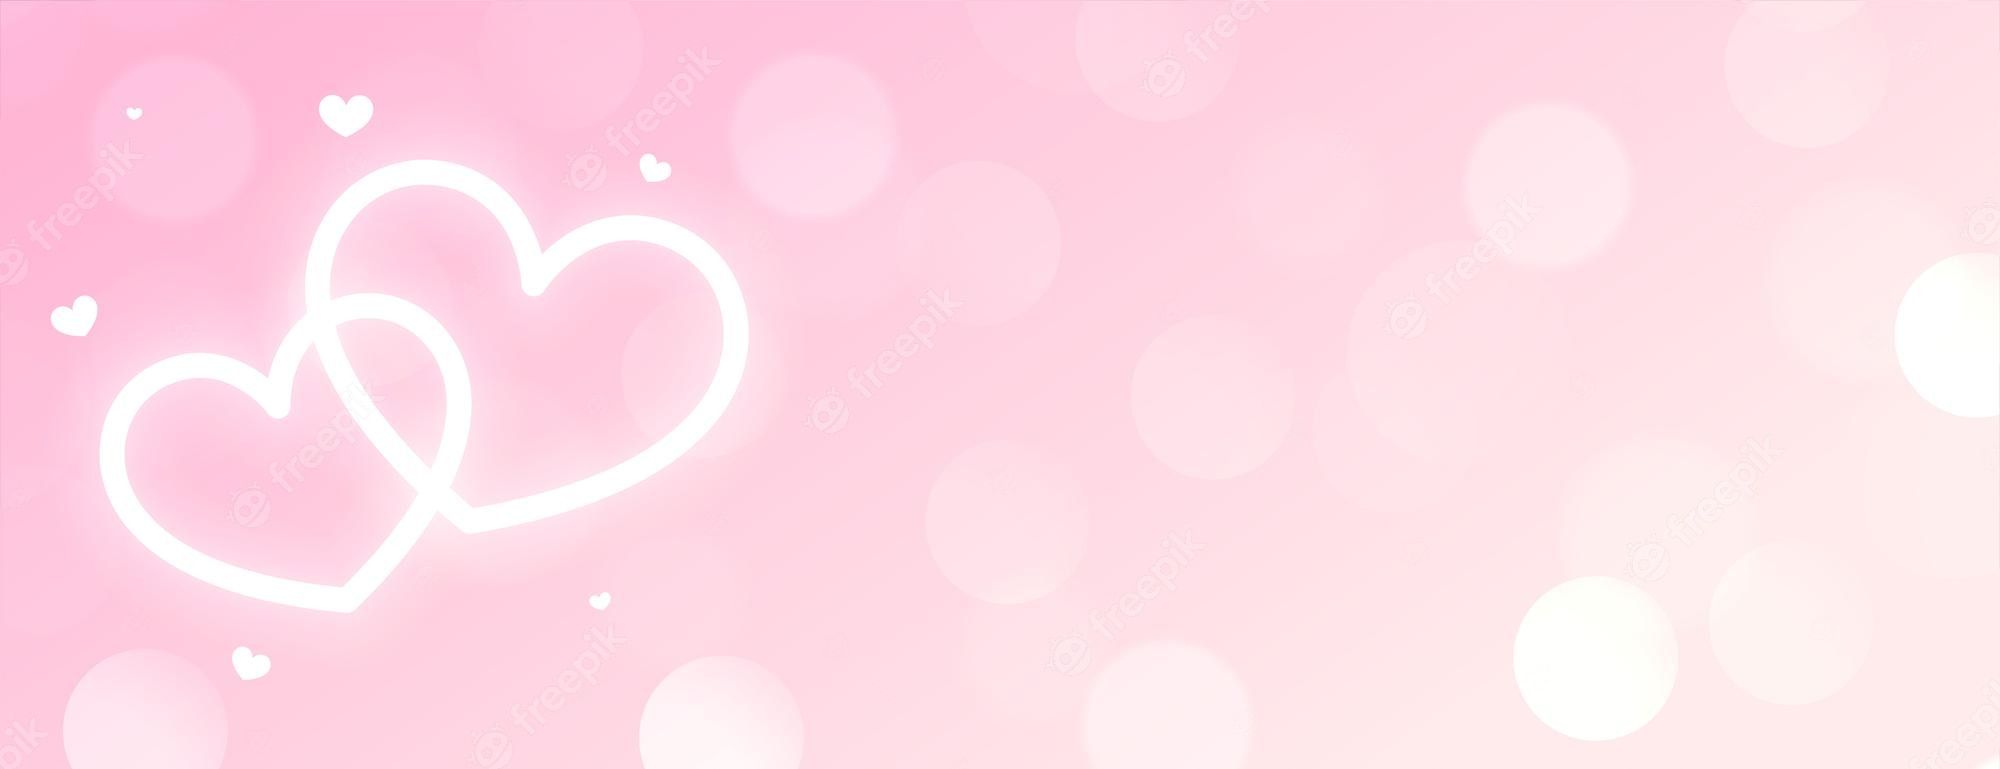 Pink Heart Wallpaper Image